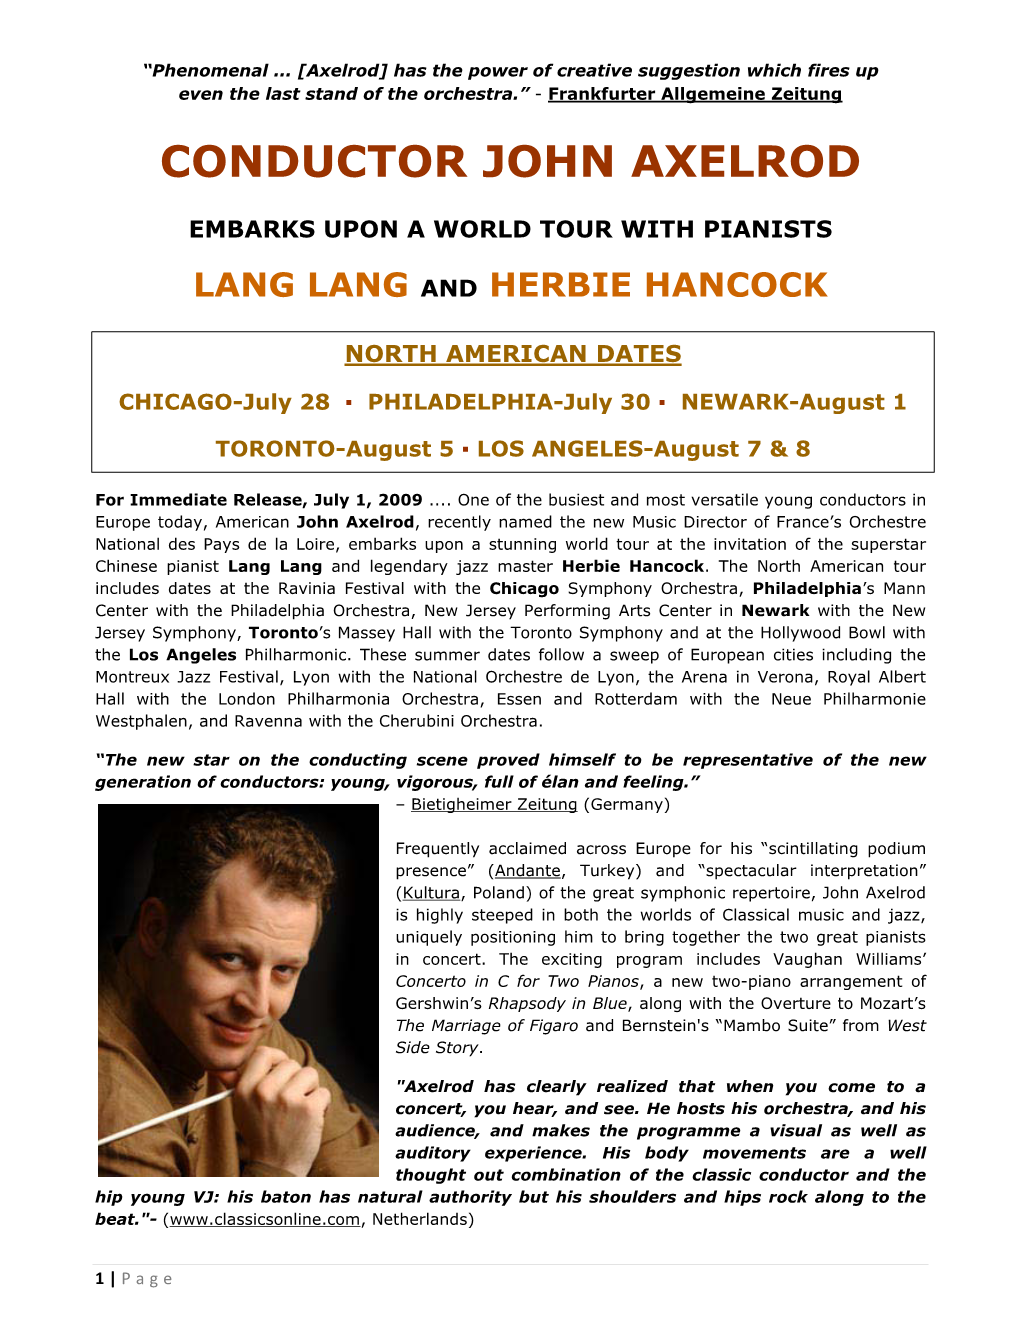 Conductor John Axelrod